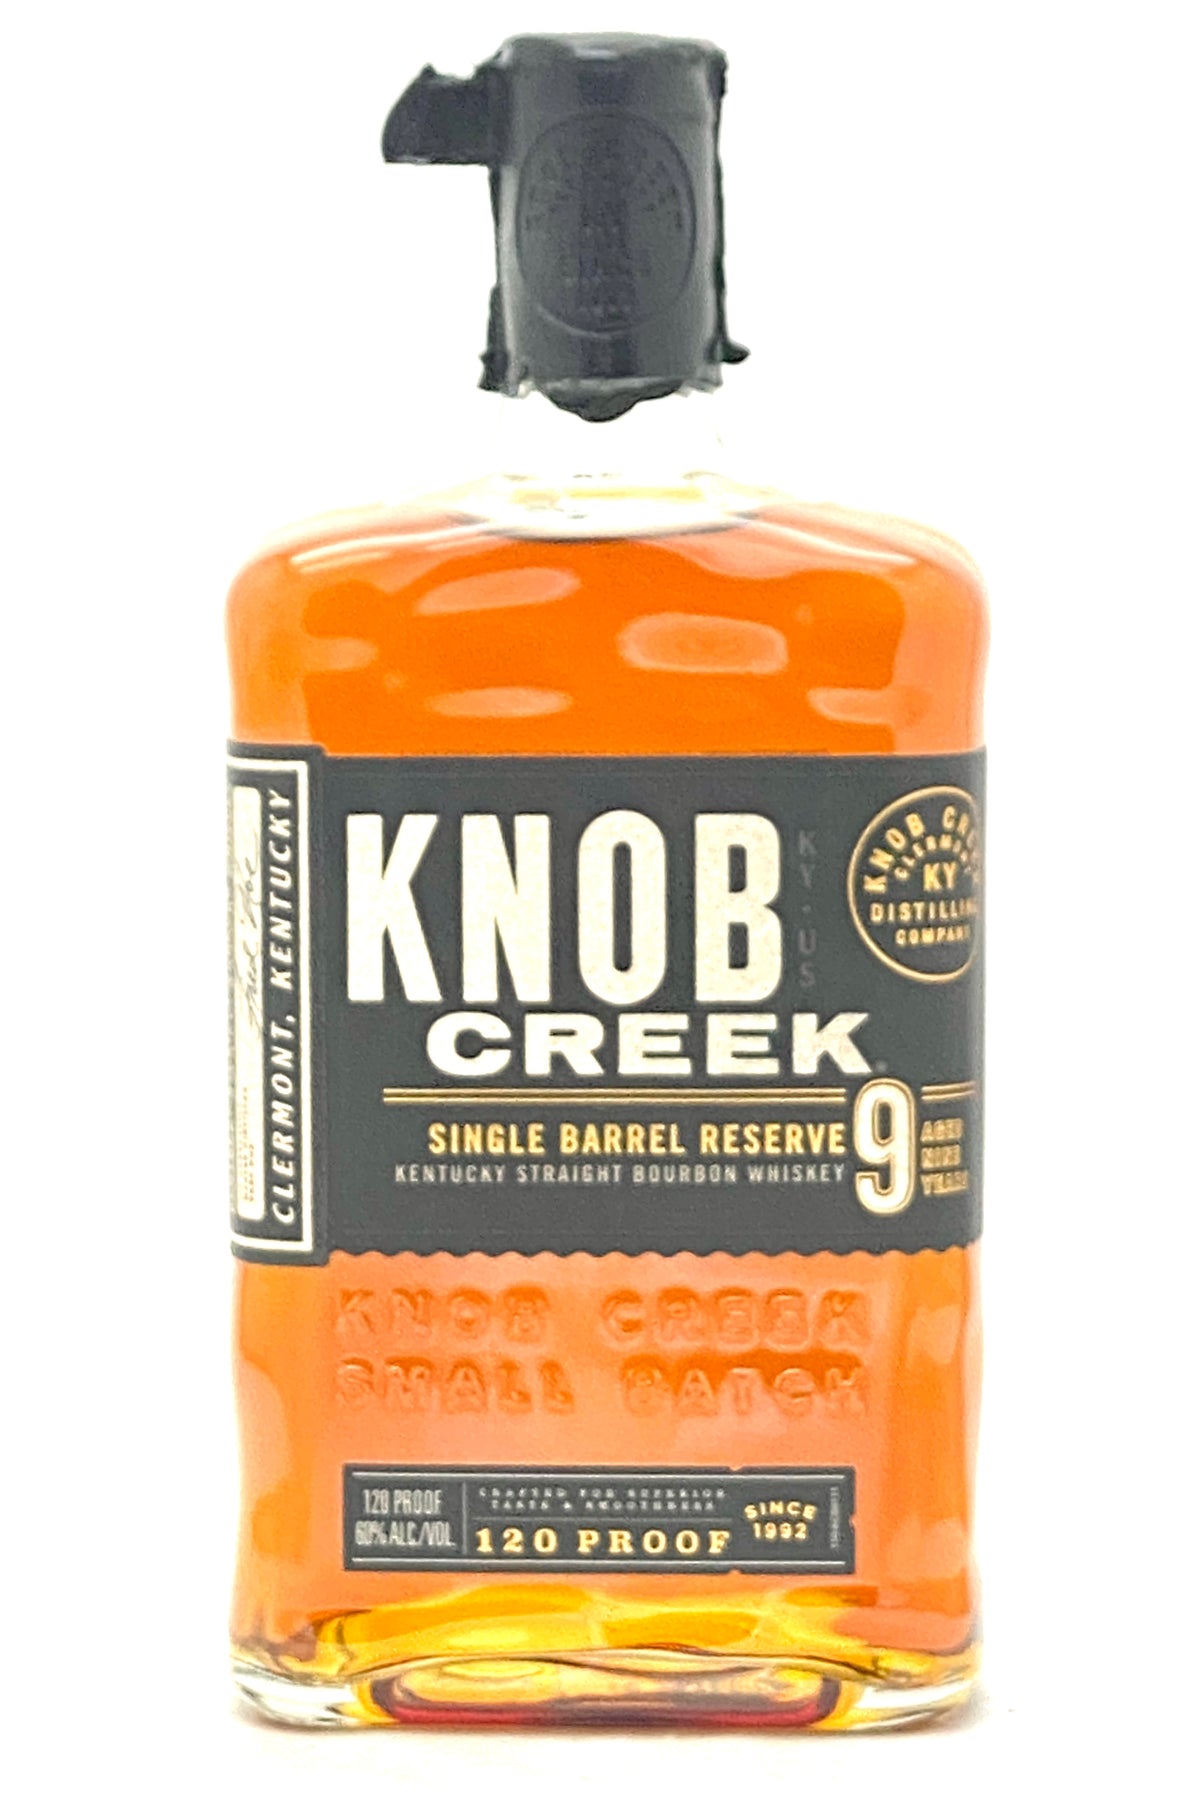 Knob Creek 9 Year Old Single Barrel Reserve Bourbon Whiskey 120 Proof